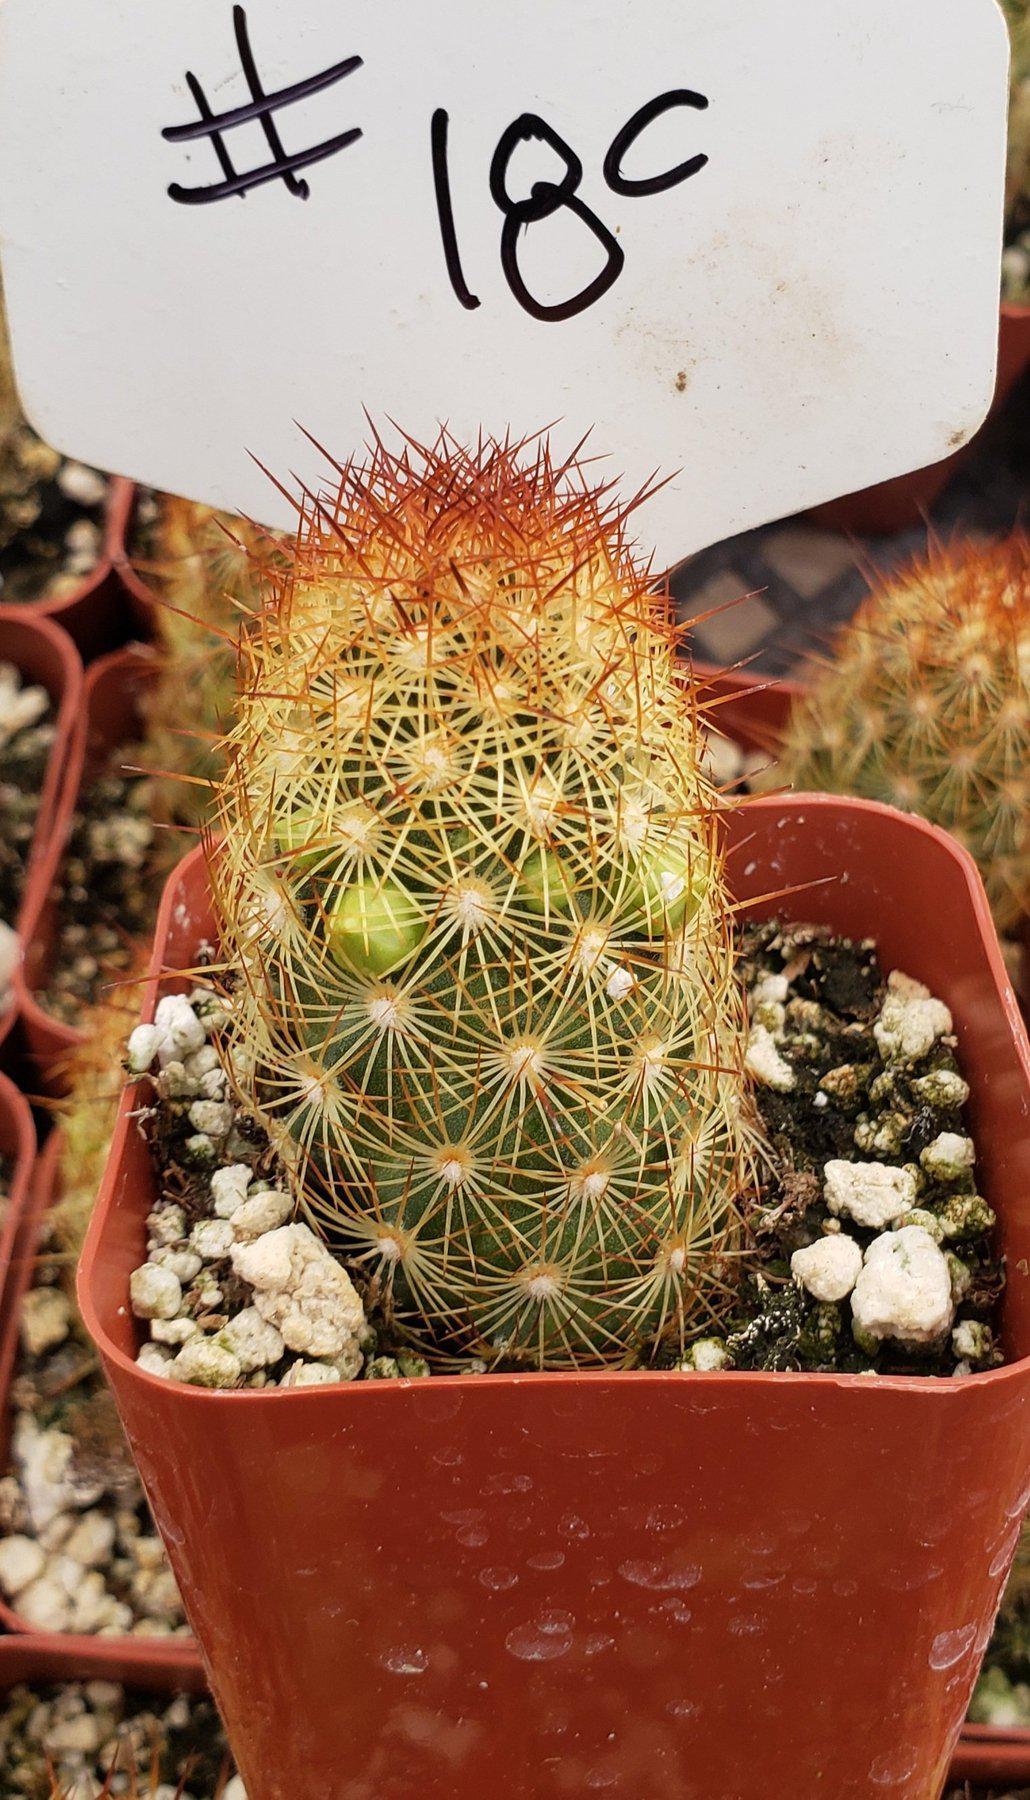 #18C Mammilaria Copper King 2"-Cactus - Small - Exact Type-The Succulent Source